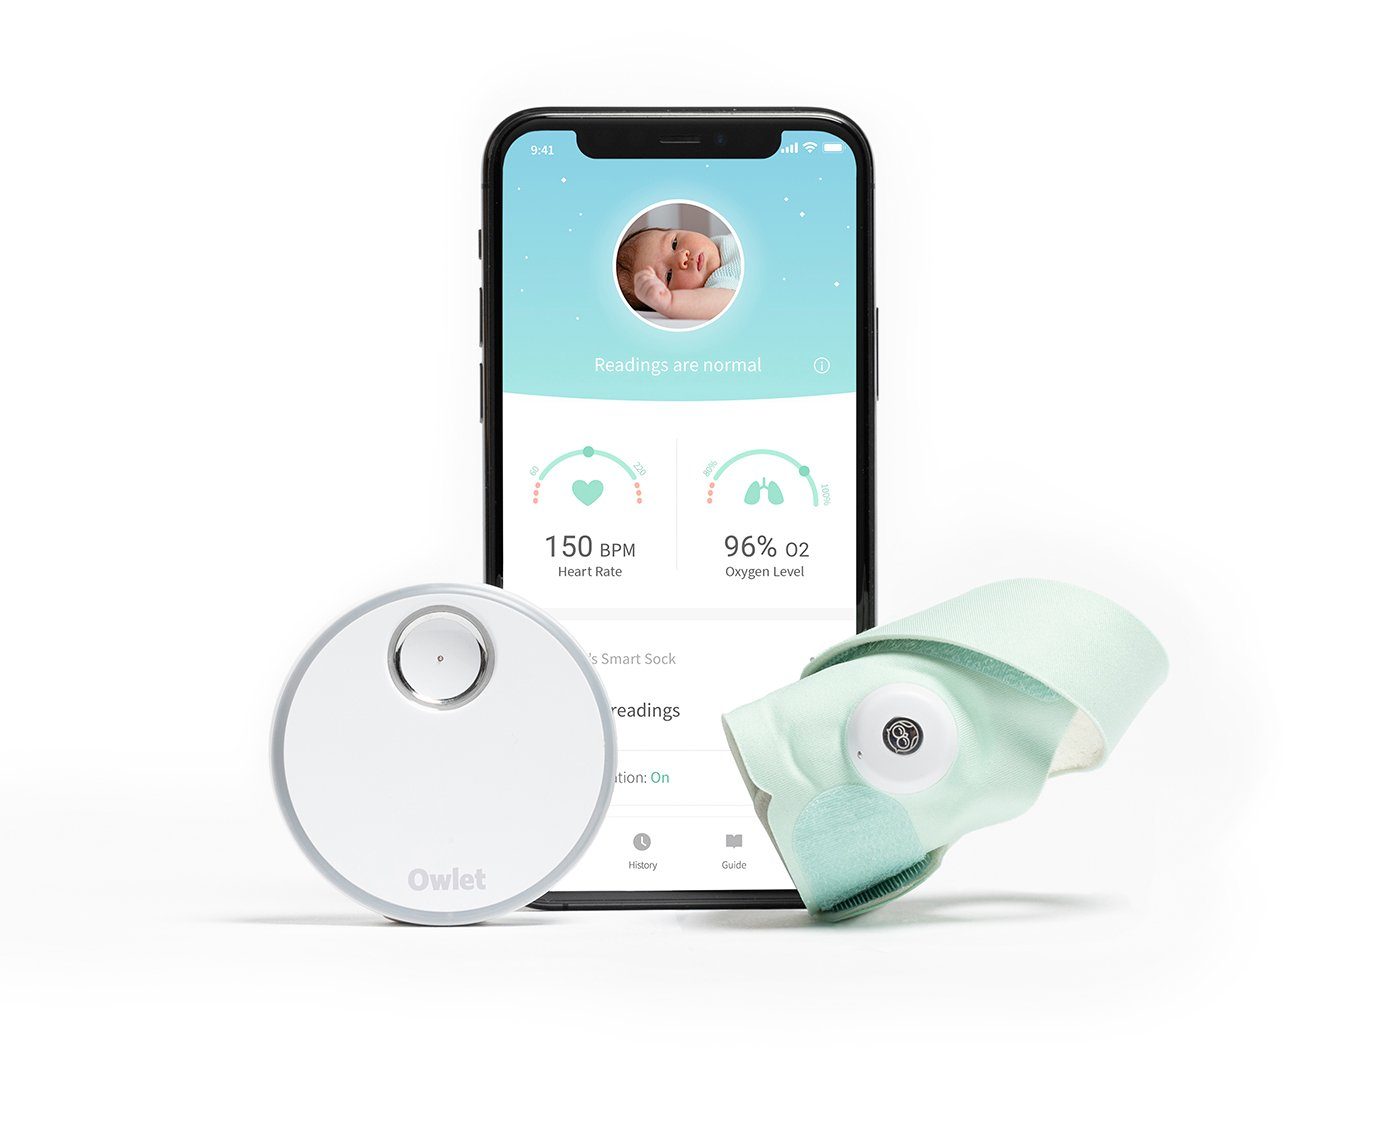 Herzfrequenz 3 via App Original-Mintgrün Schlaf und Tracking Smart Owlet Sock Smart - DE Baby Babyphone, von Sock, Care